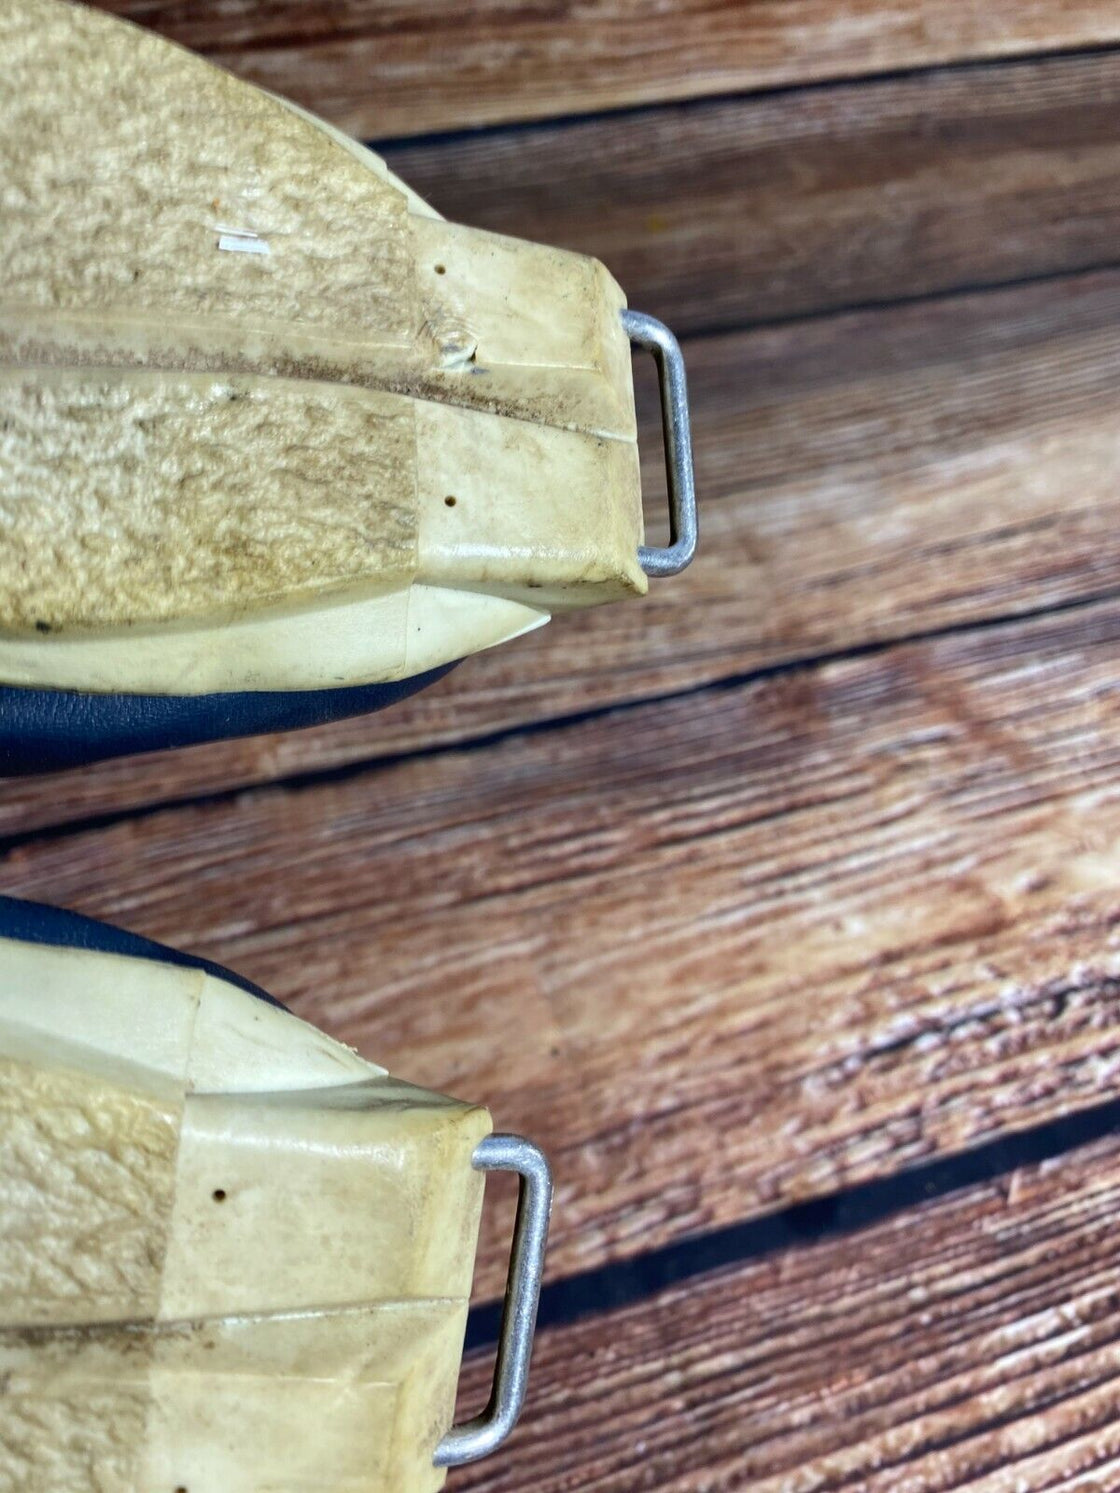 SALOMON Vintage Nordic Cross Country Ski Boots Size EU37 US5.5 SNS Old Bindings